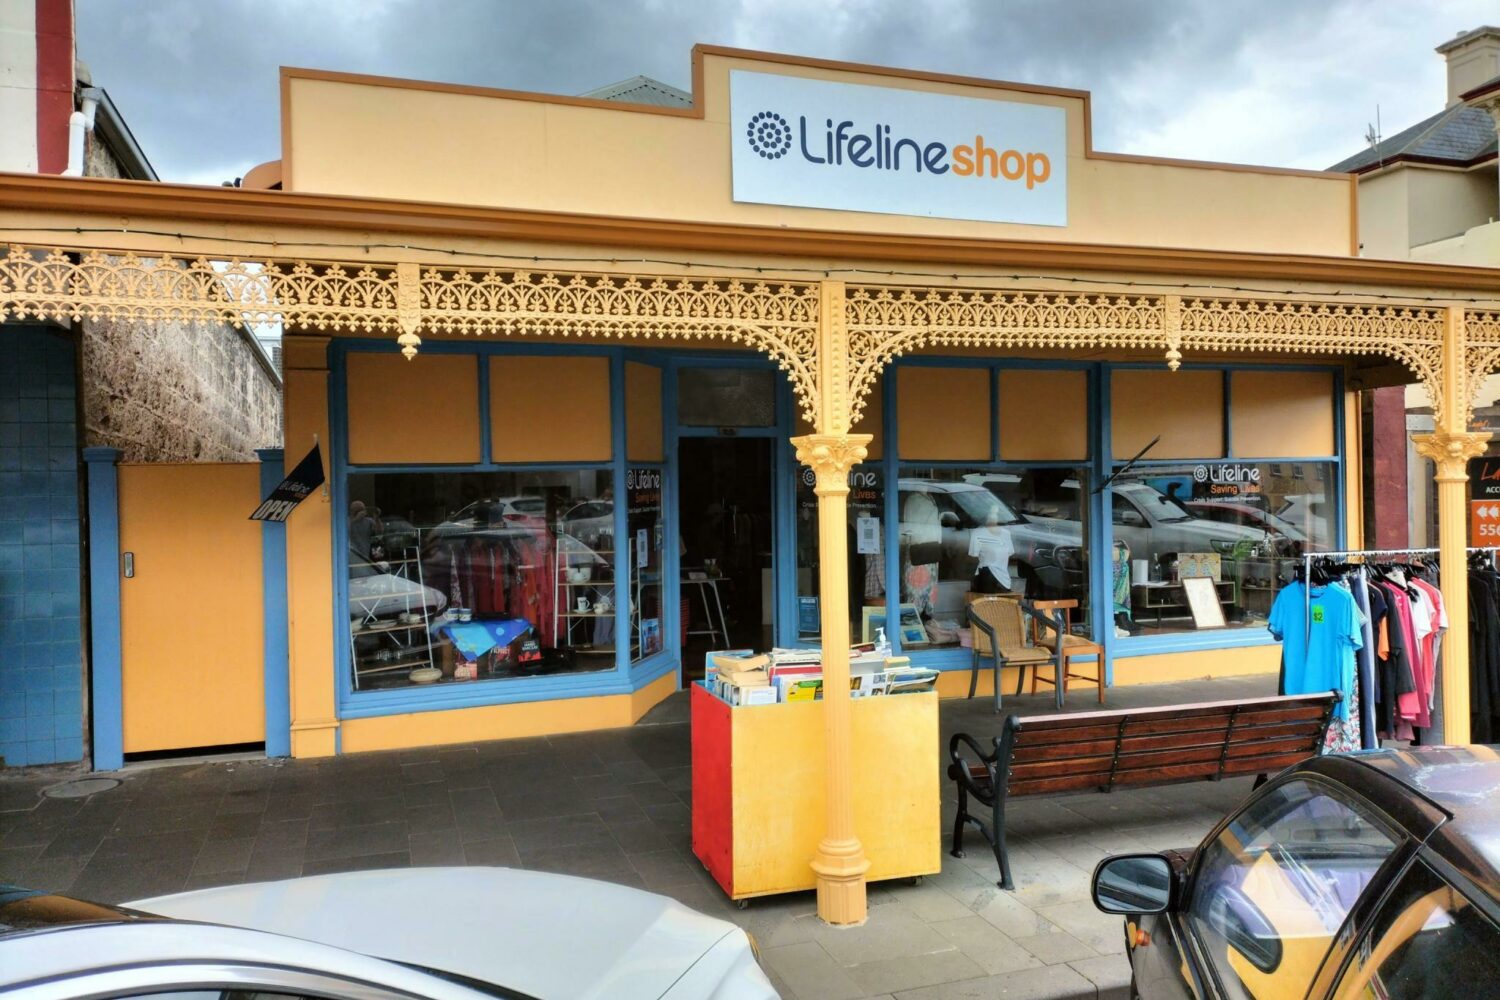 Port Fairy Lifeline Shop